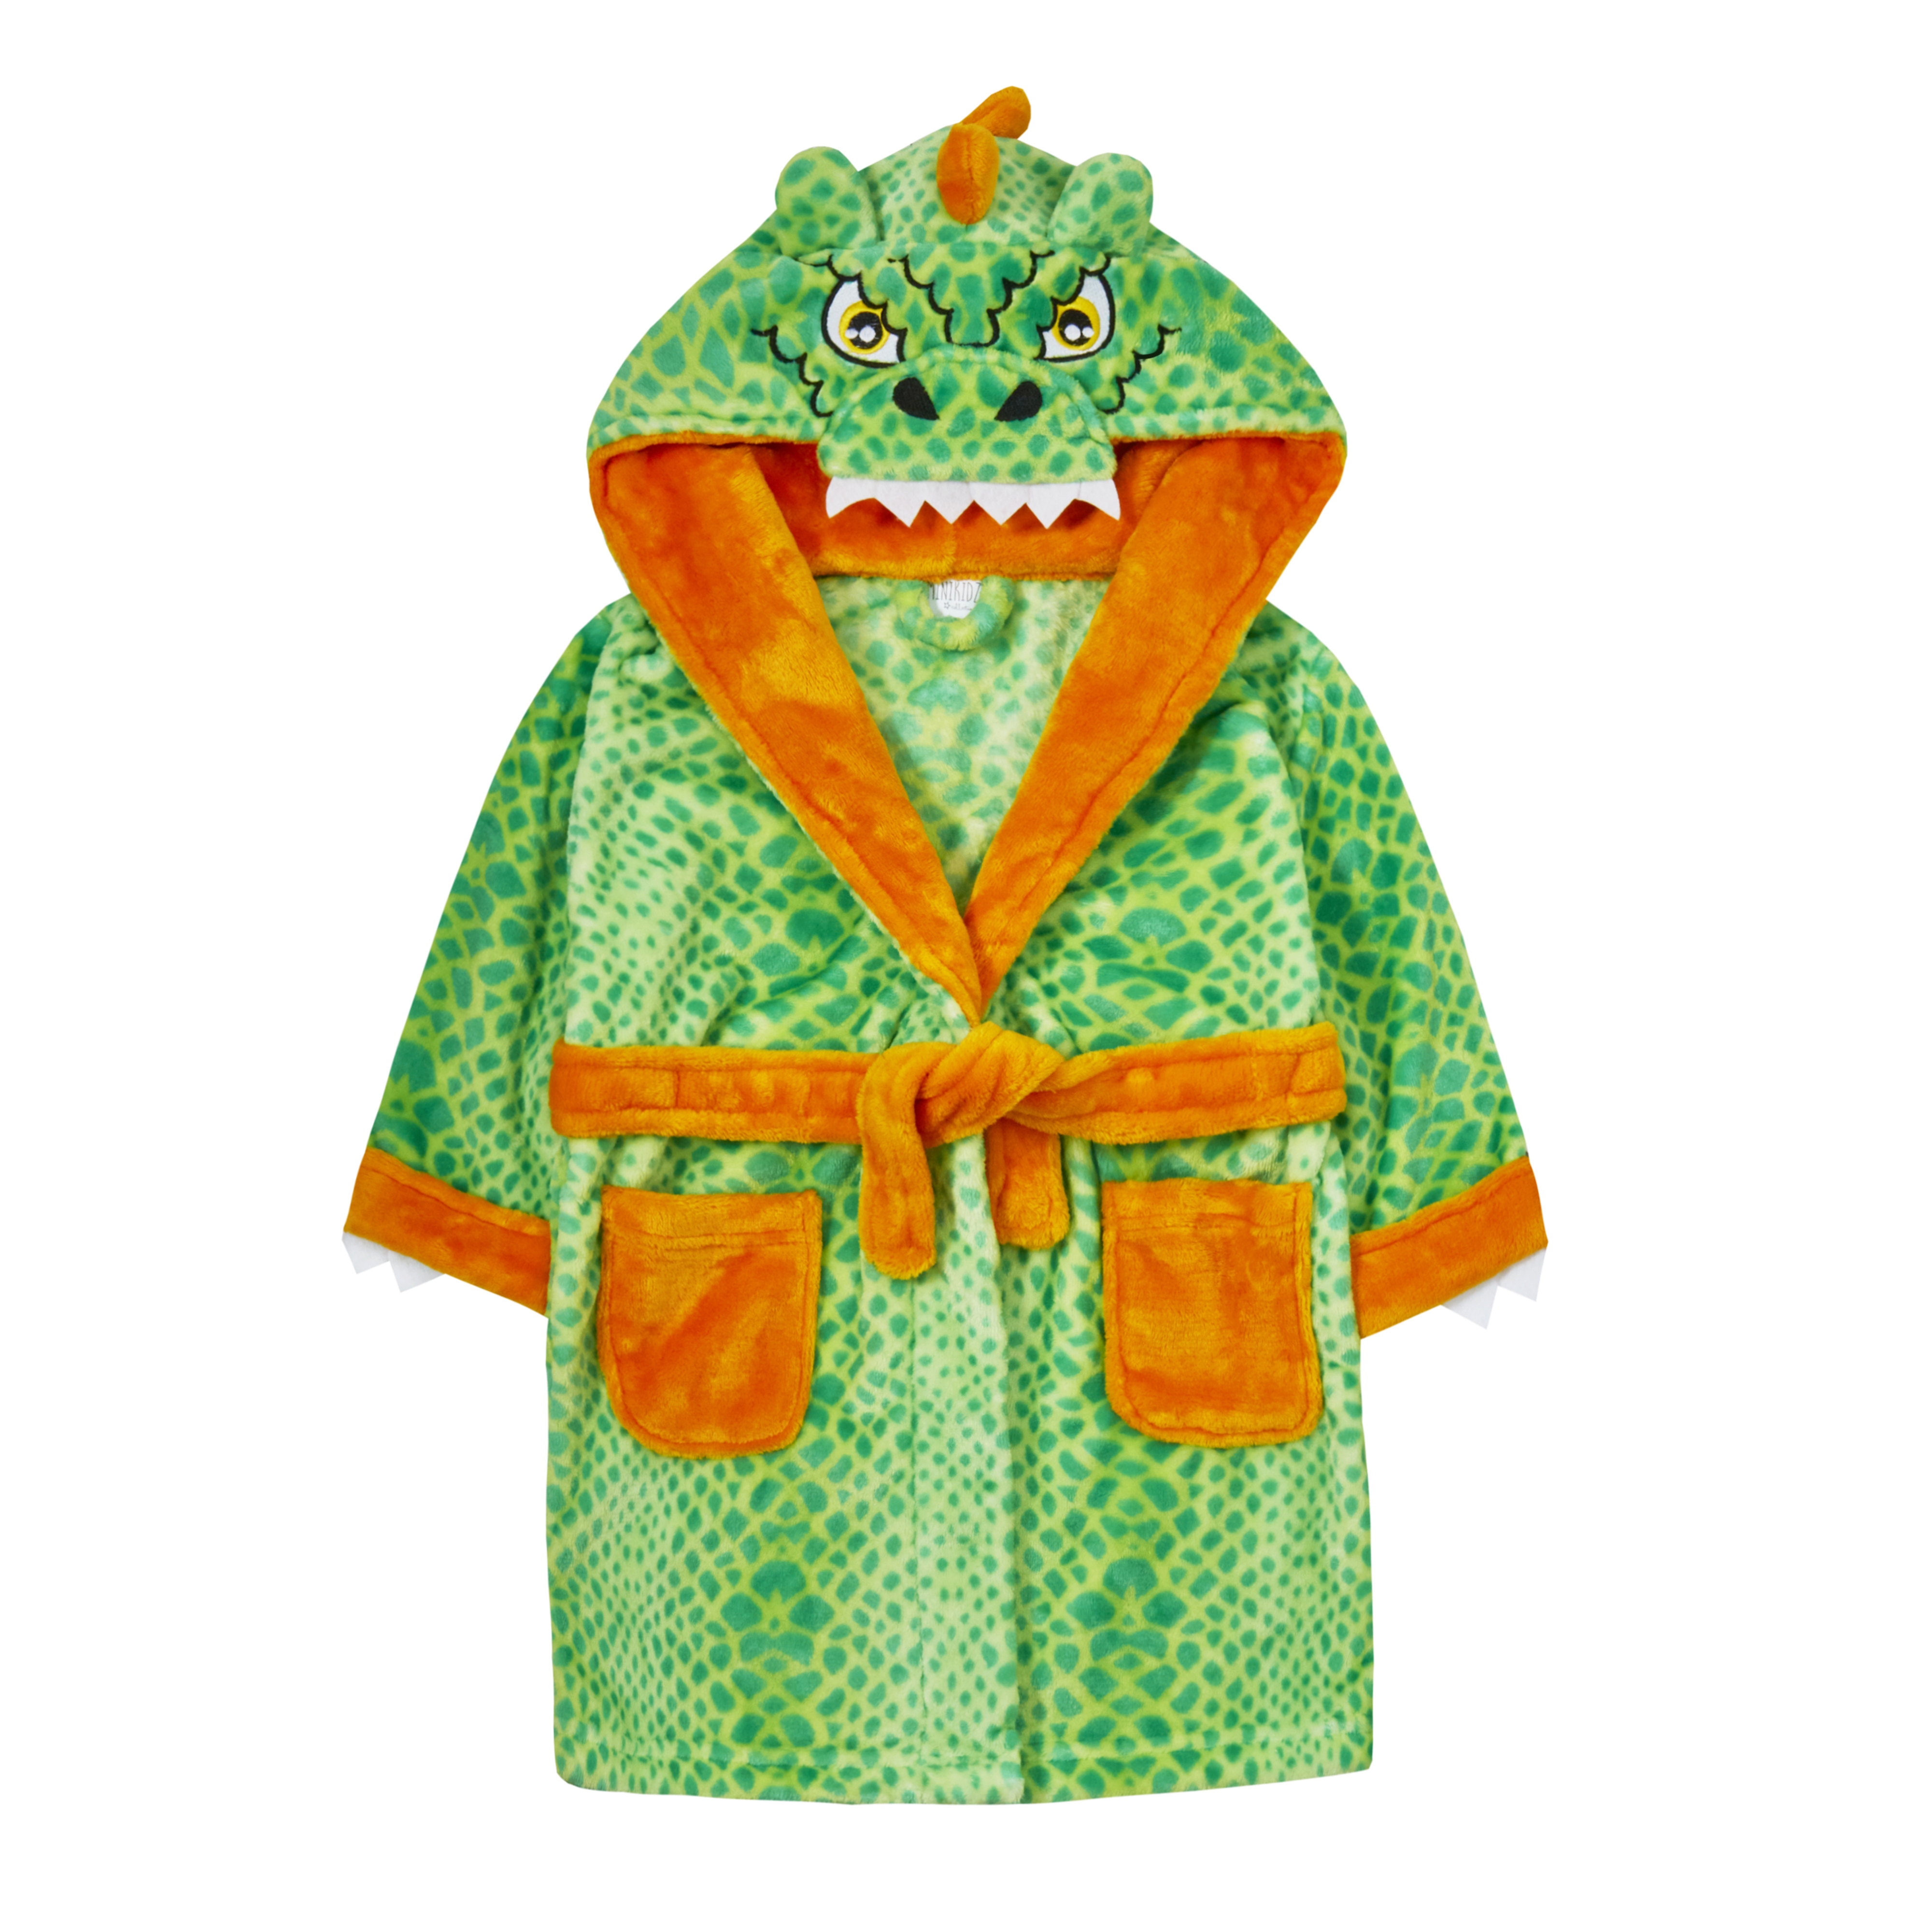 dinosaur dressing gown